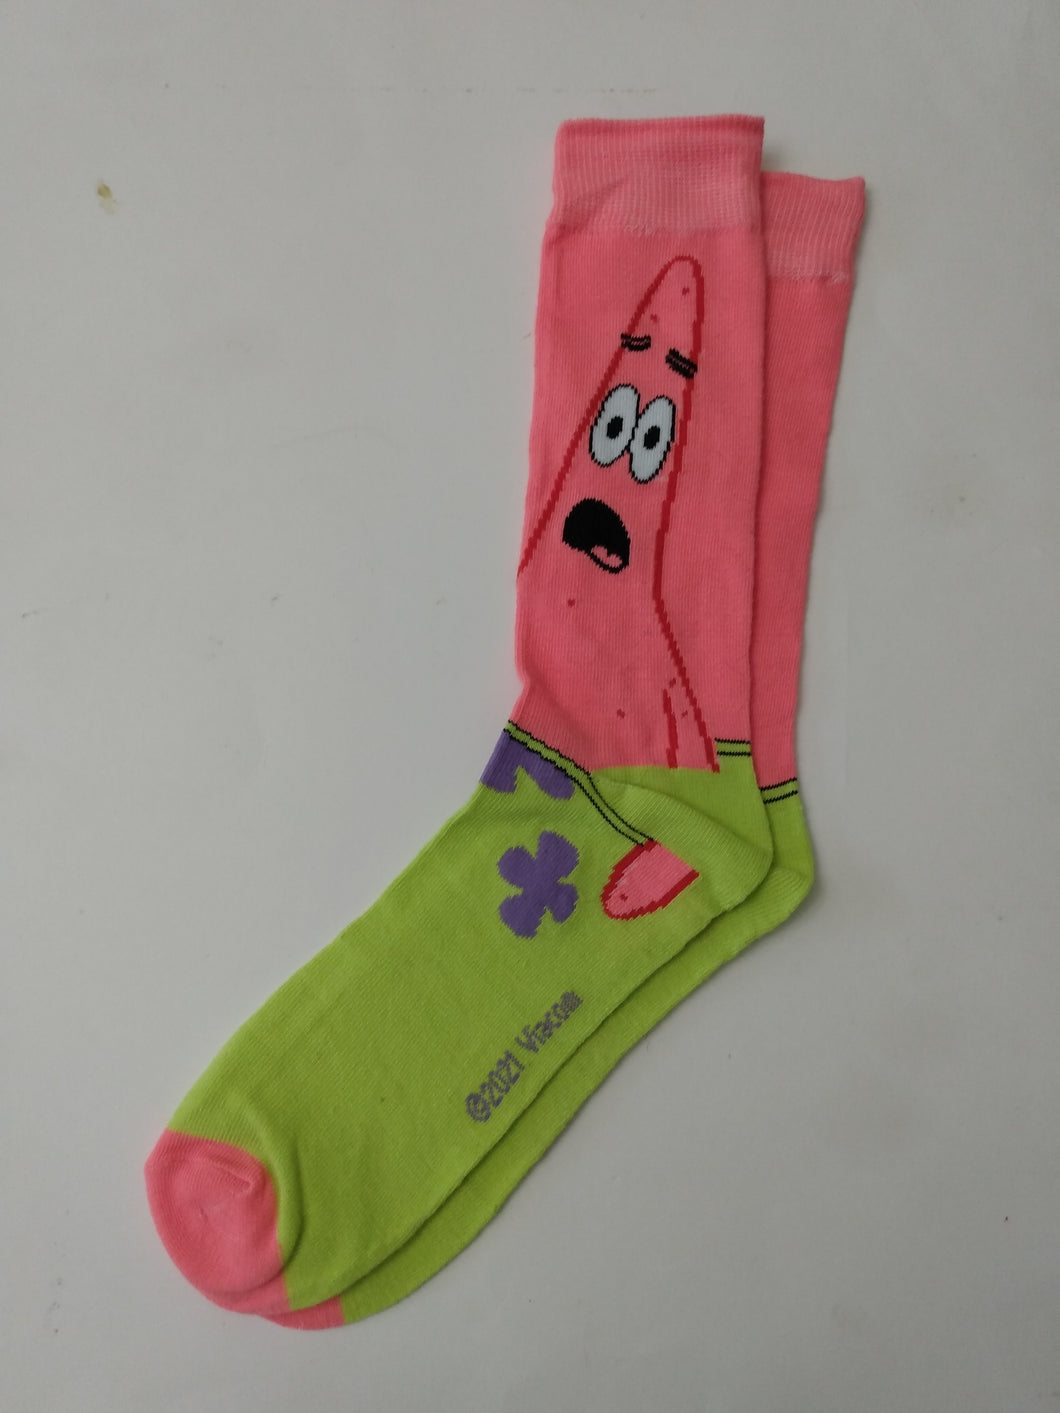 Spongebob Stocking